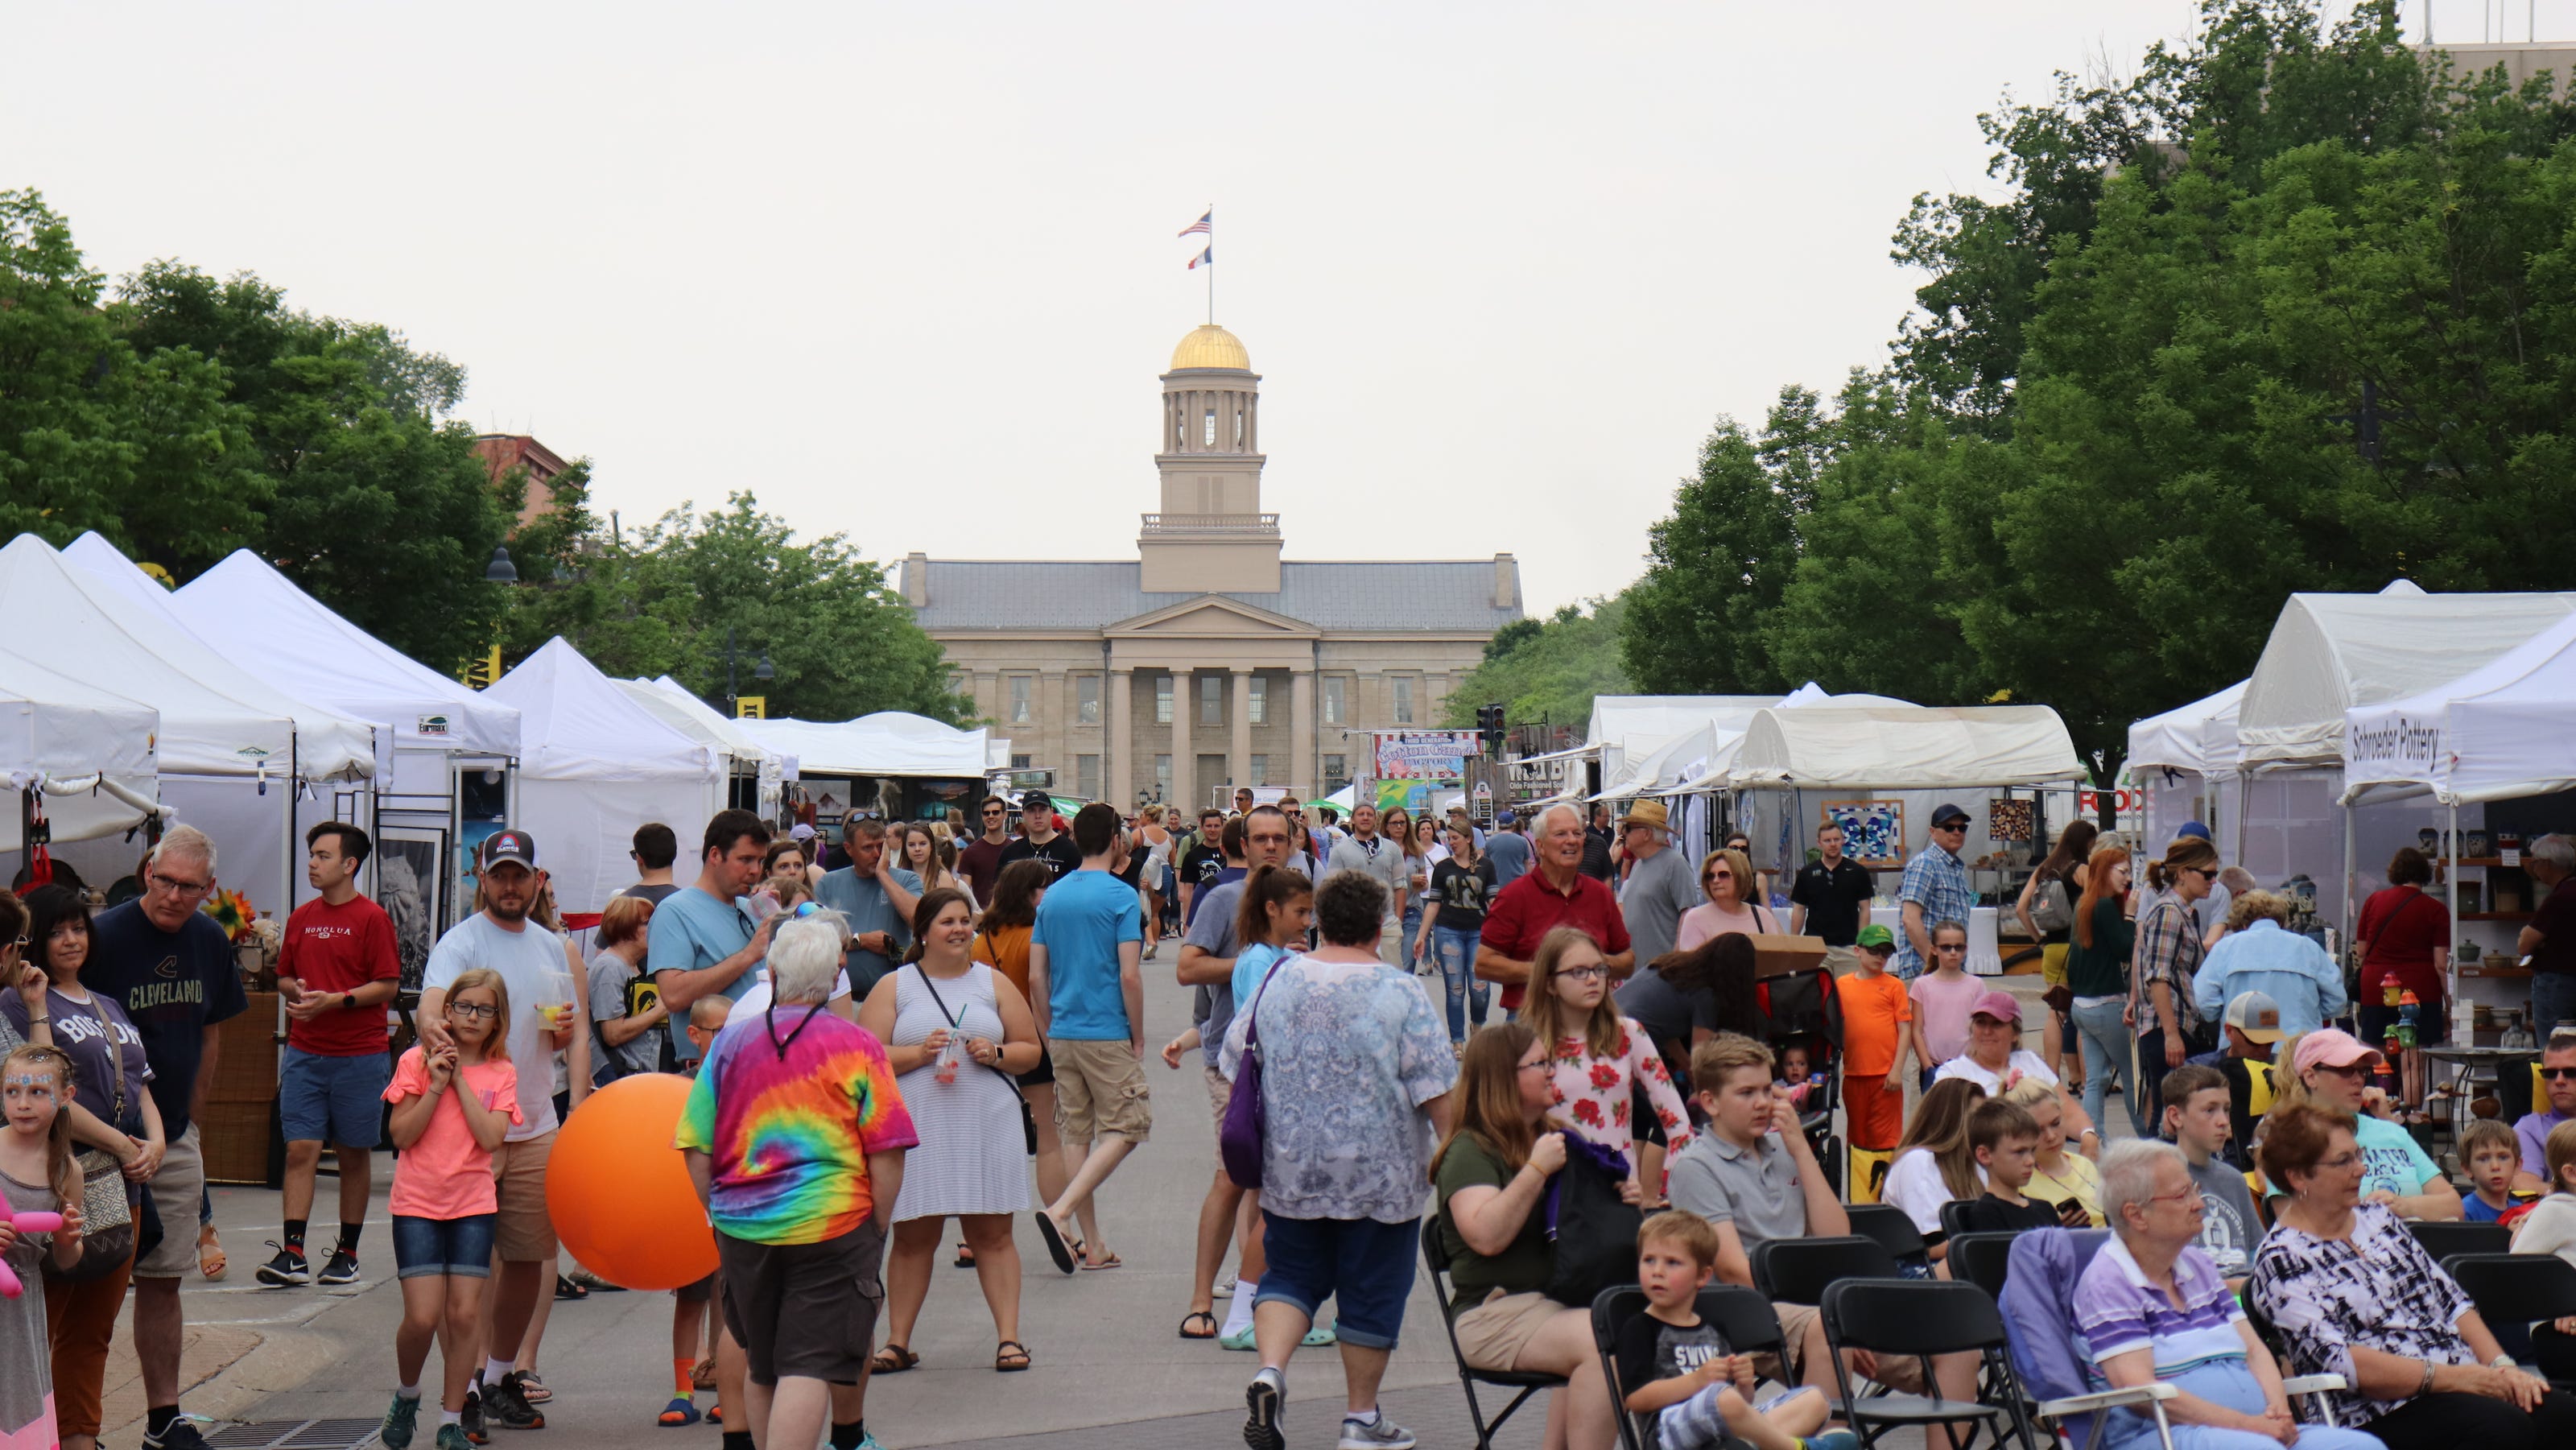 Iowa Arts Festival brings weekend of festivities to downtown Iowa City